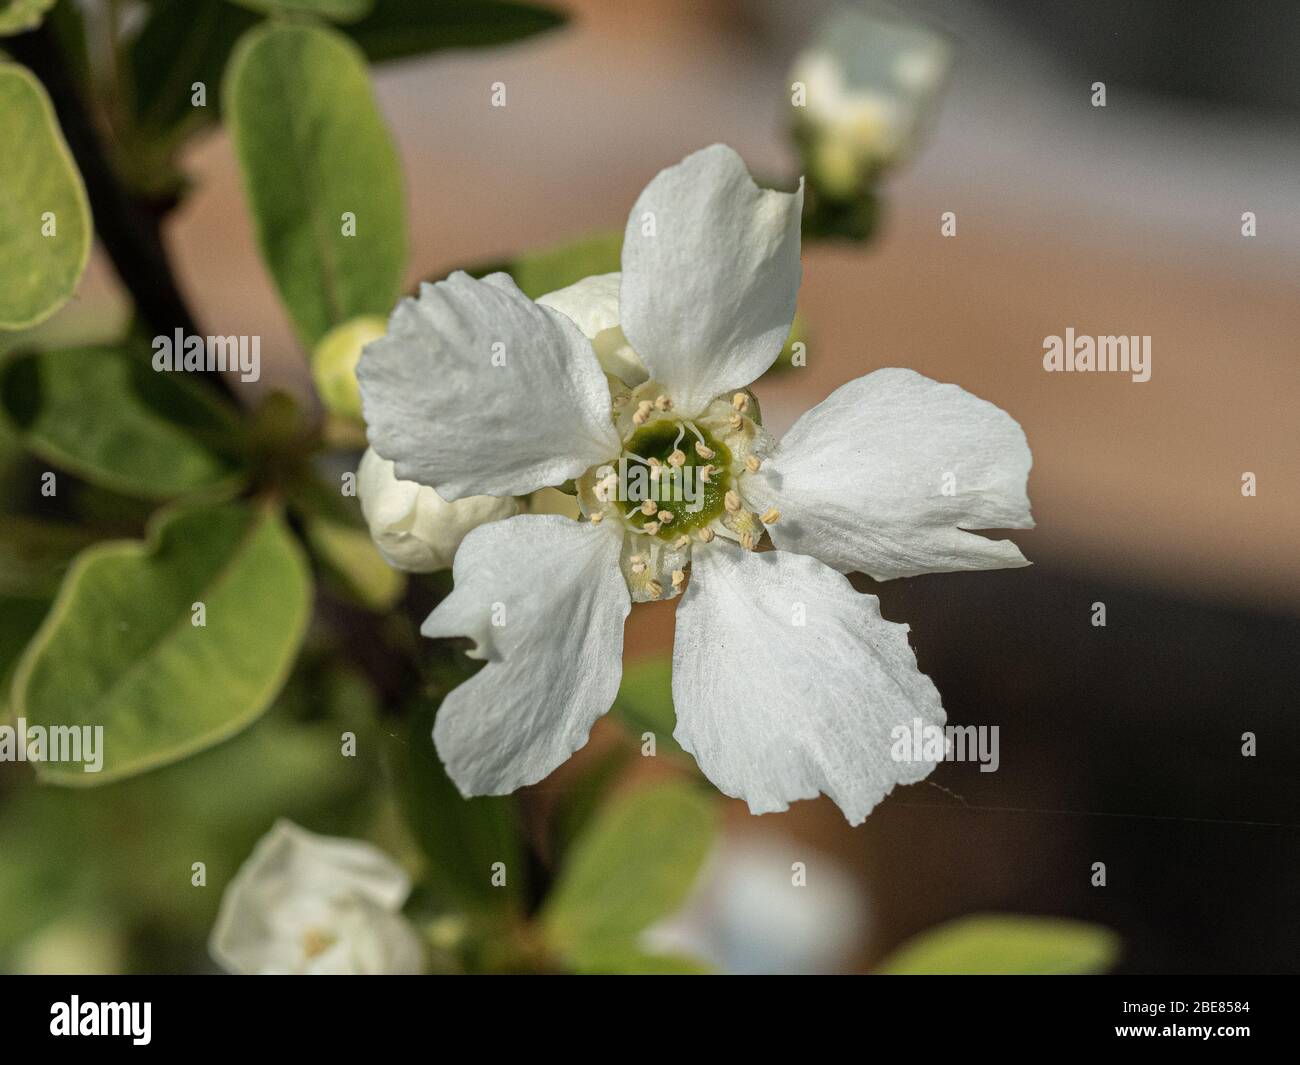 A close up of a single white flower of the shrub Exochorda grandiflora Niagara Stock Photo